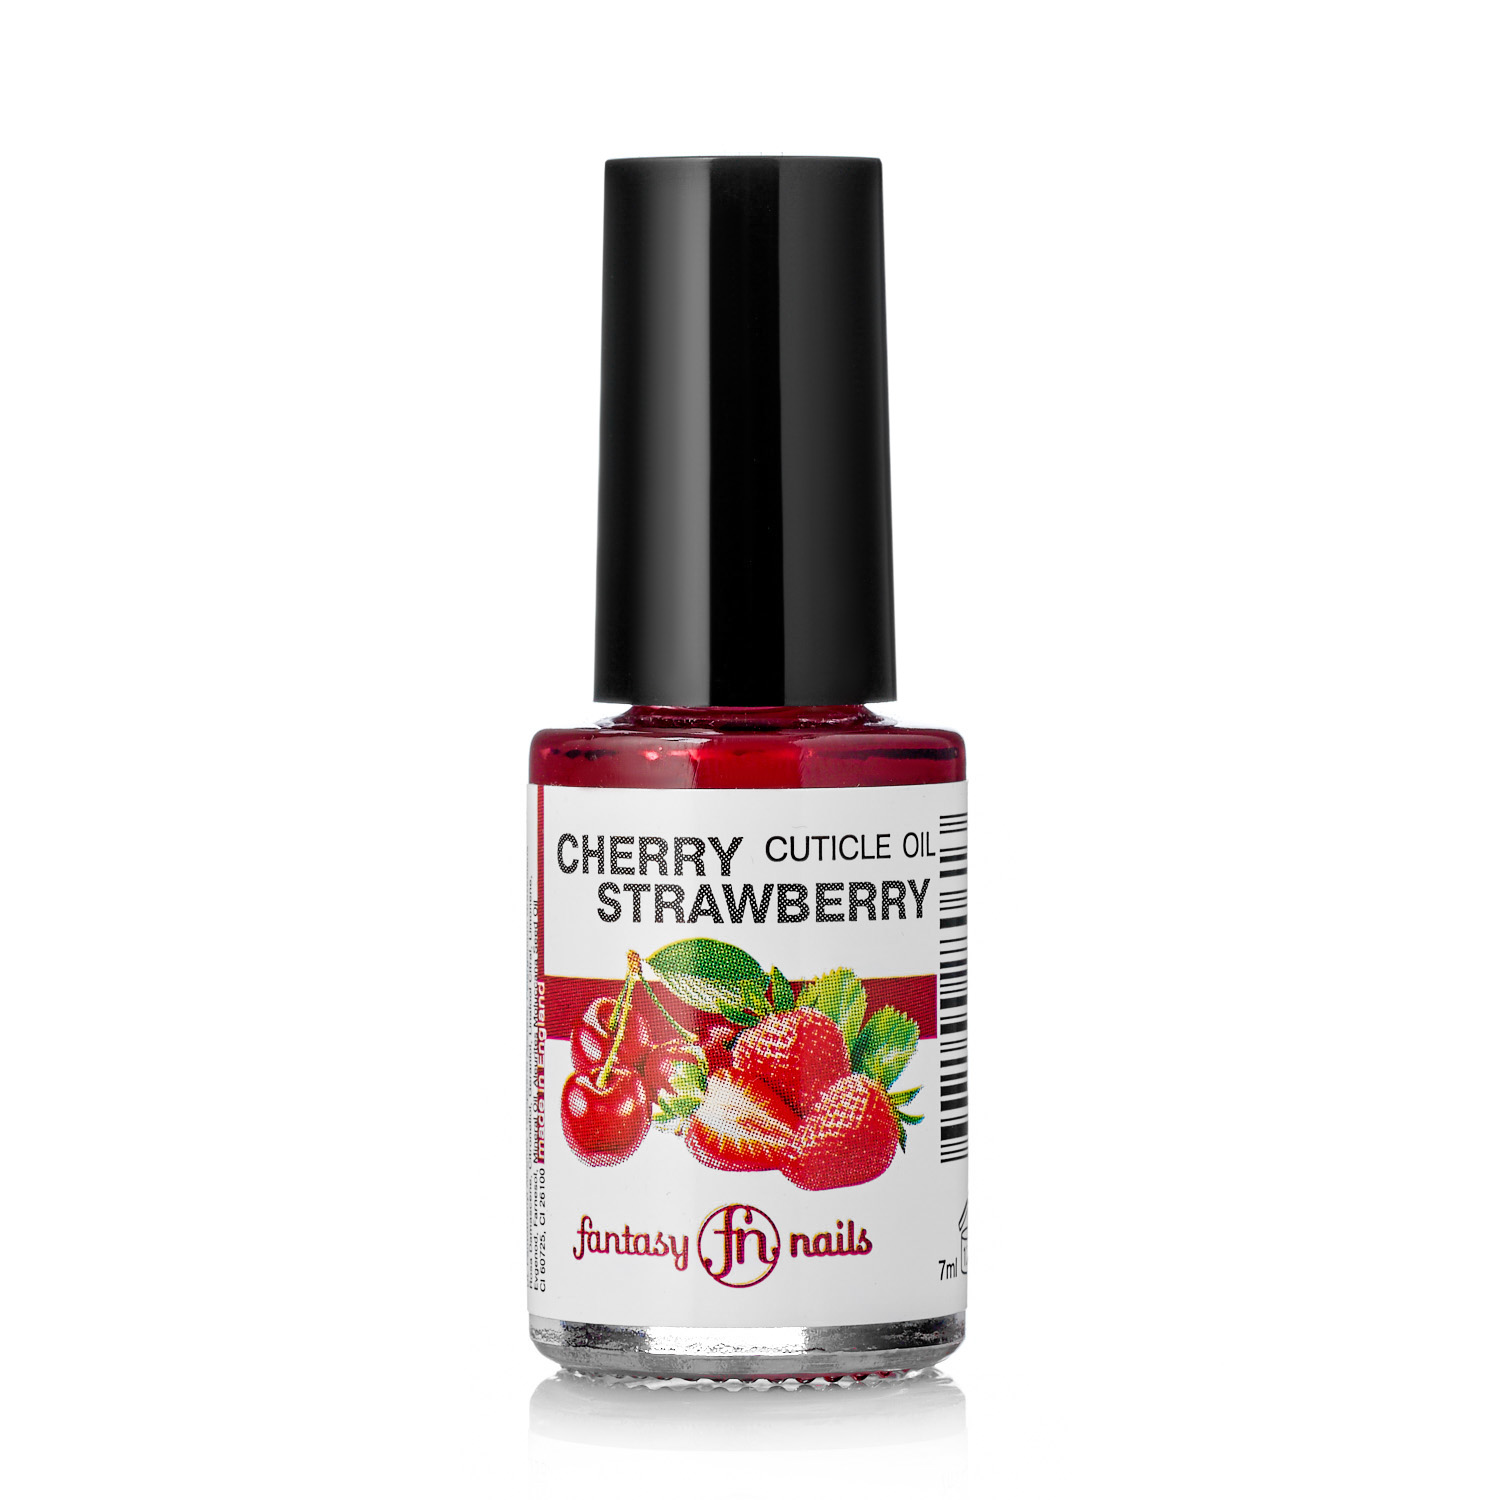 Масло для кутикулы Cherry/Strawberry («Вишня/Клубника») 7 ml из каталога Препараты для ногтей в интернет-магазине BPW.style